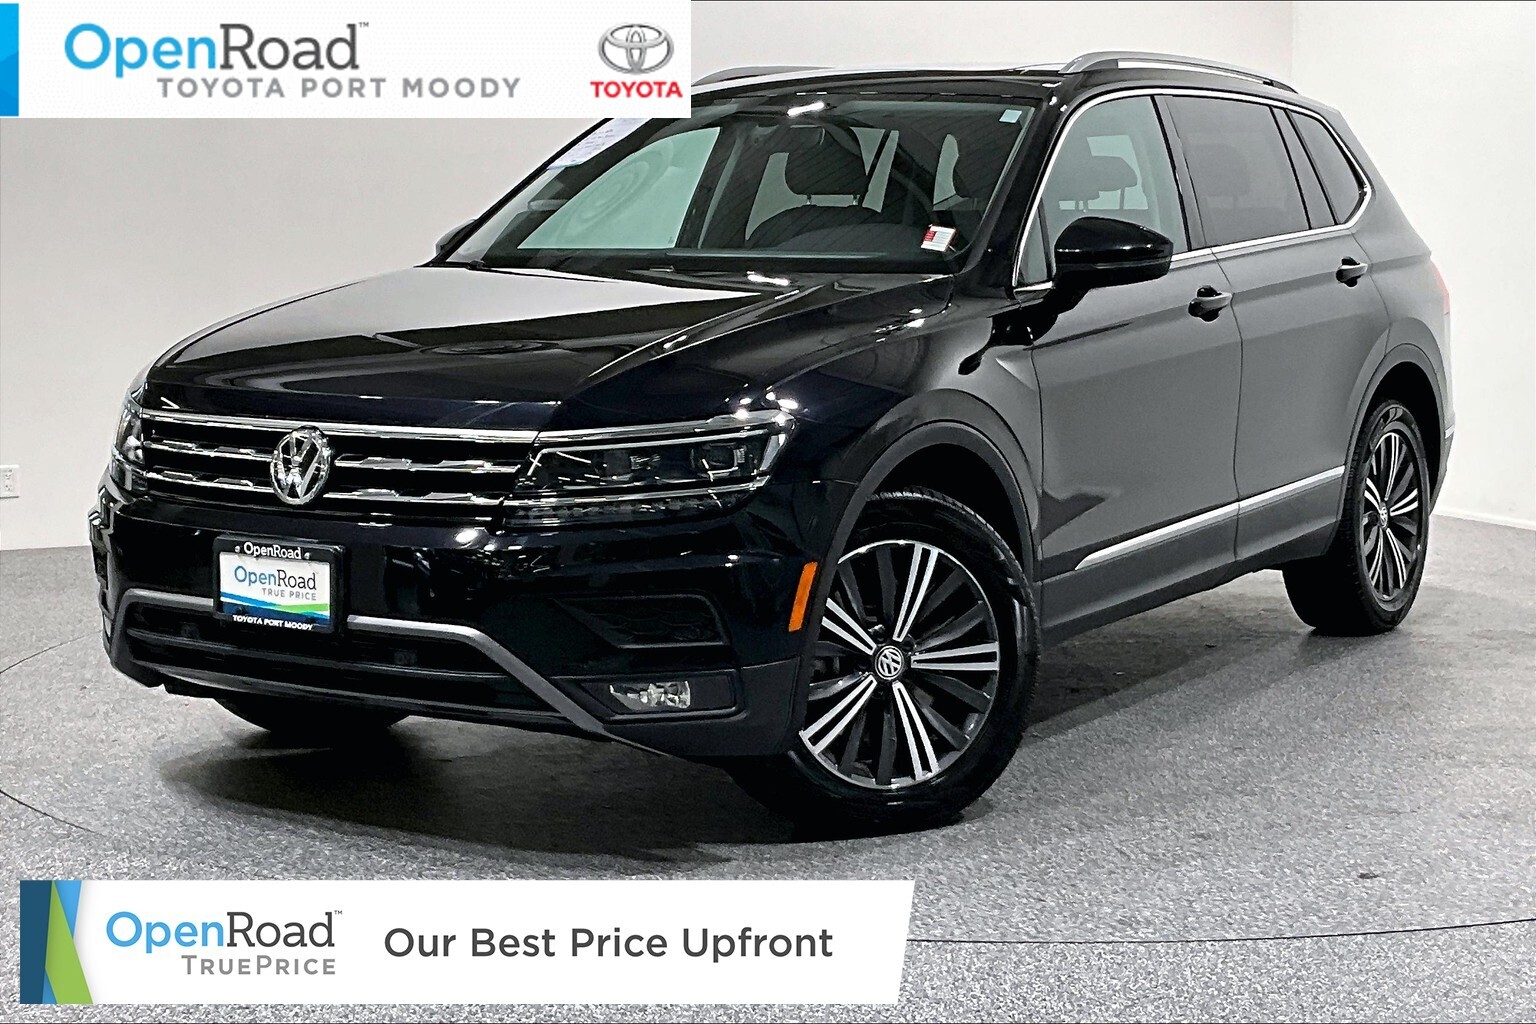 2018 Volkswagen Tiguan Highline 2.0T 8sp at w/Tip 4M |OpenRoad True Price